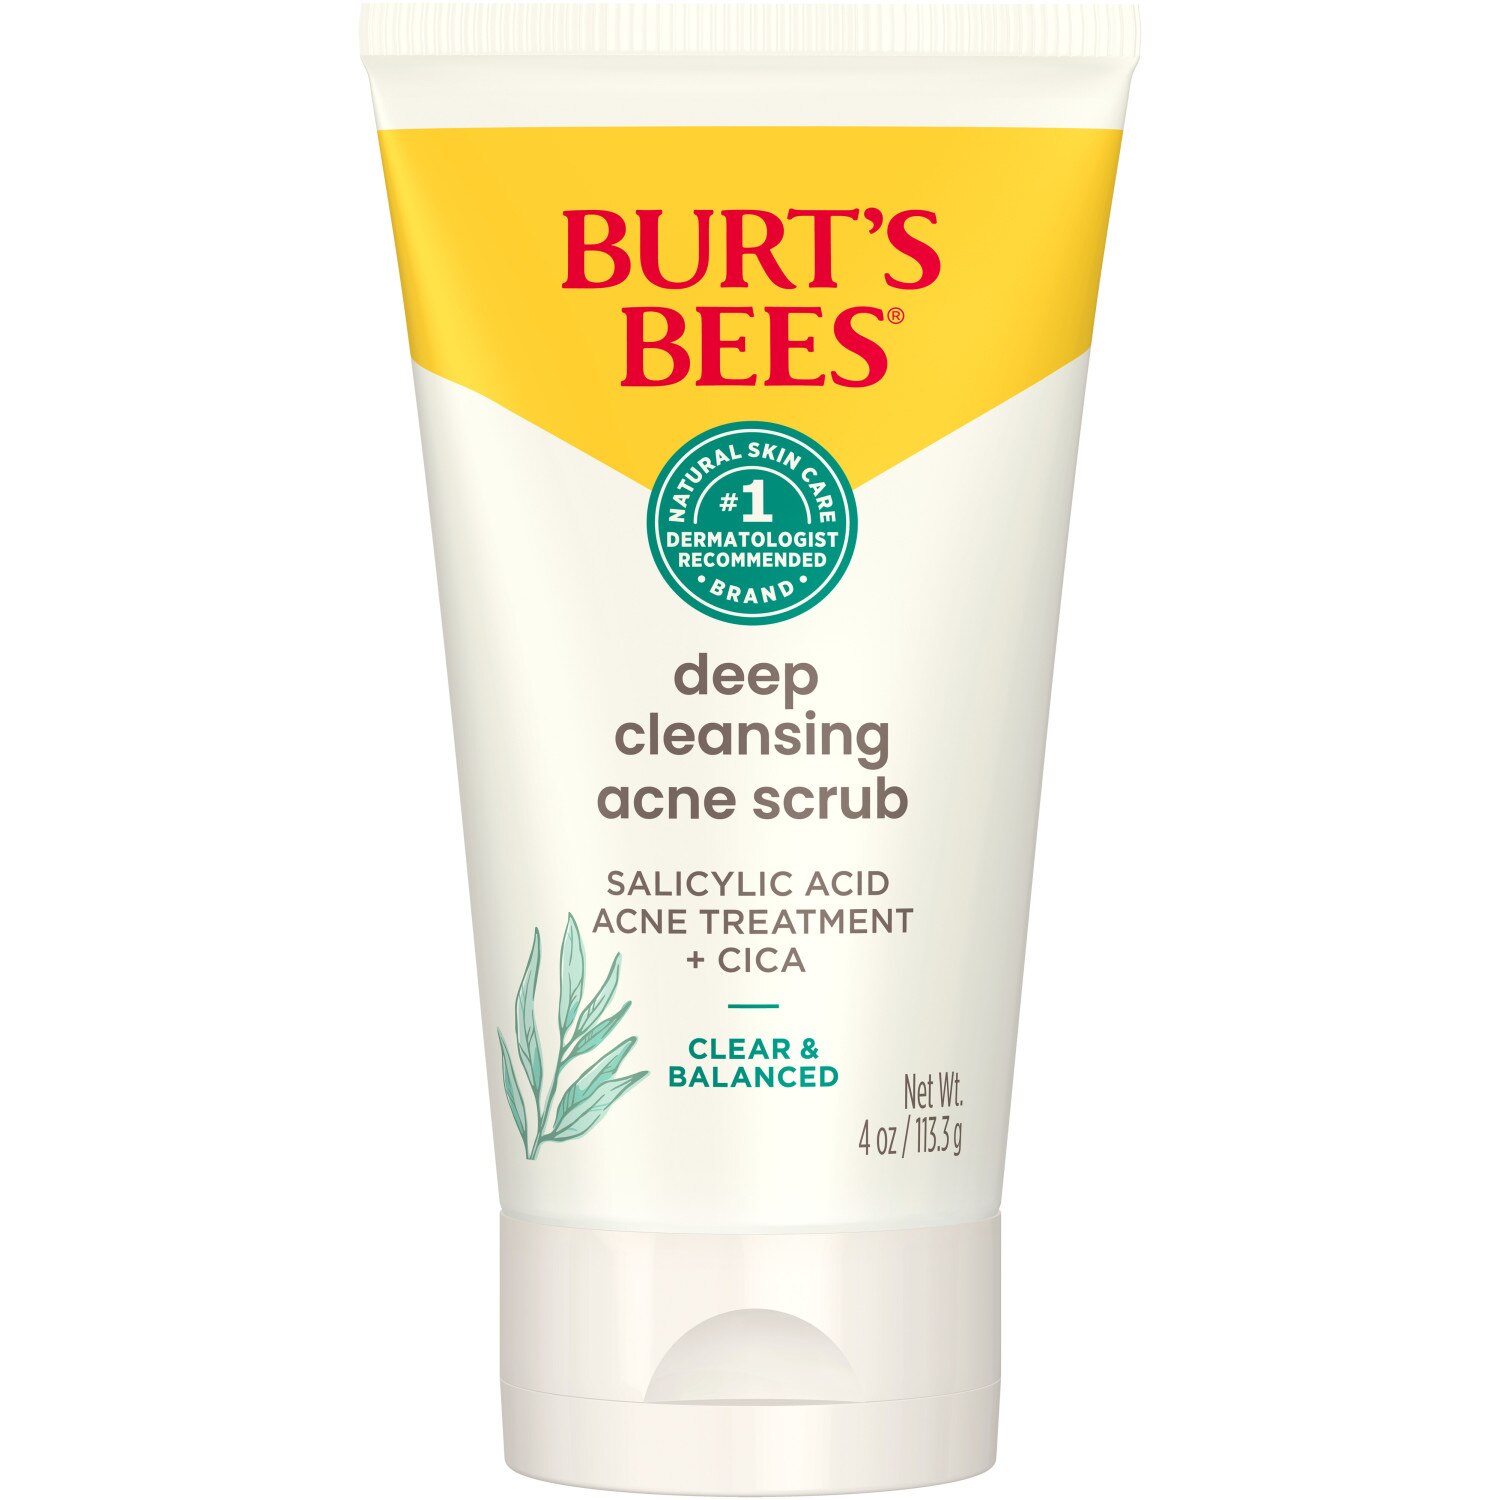 Burt's Bees Clear and Balanced Deep Cleansing Acne Scrub, 4 oz